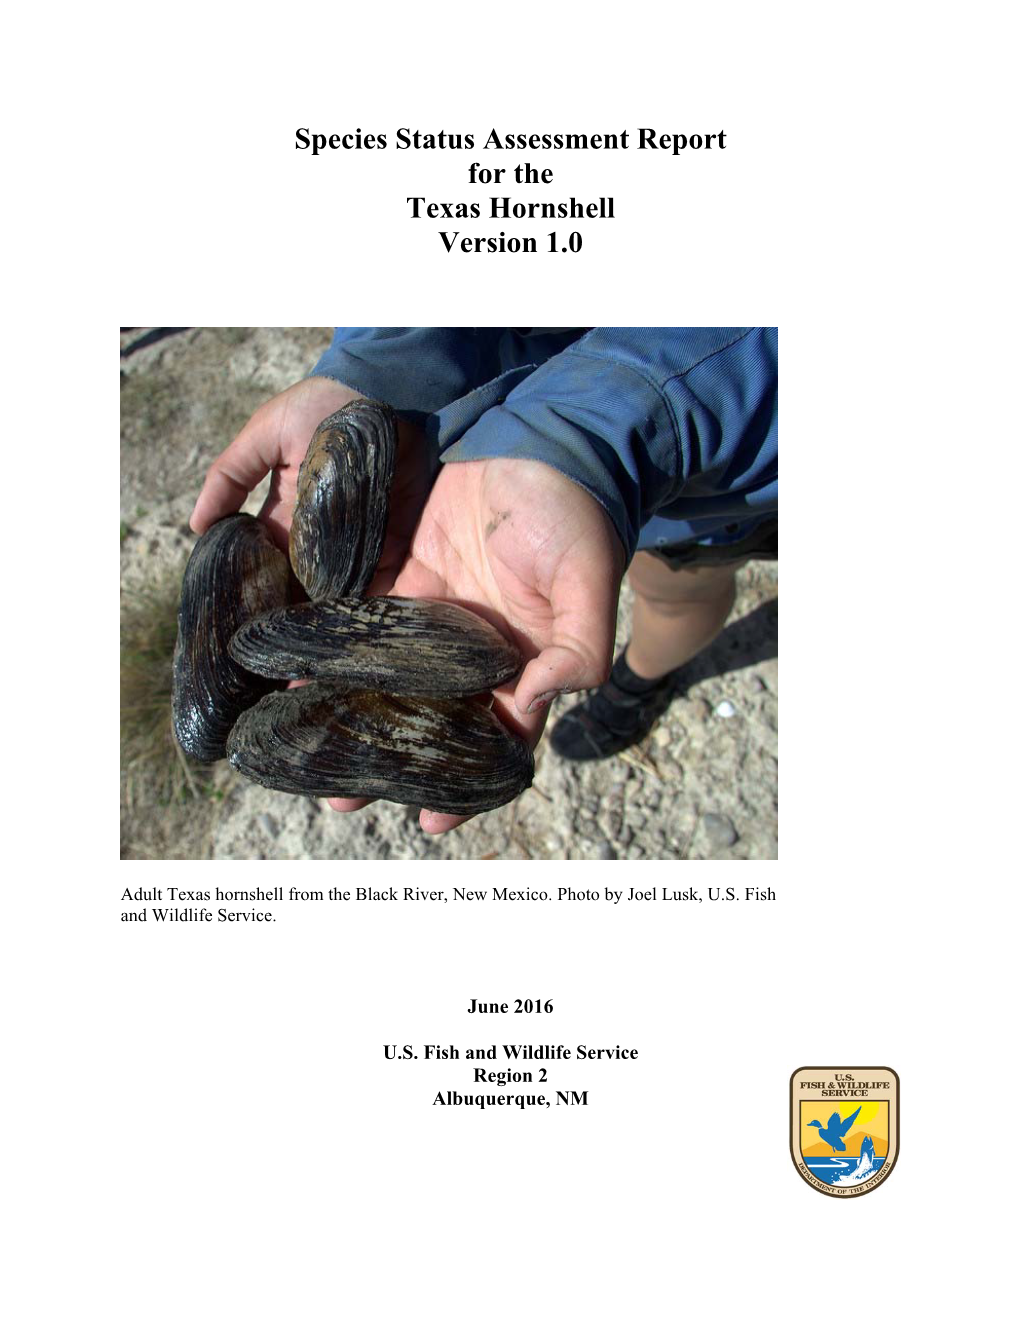 Species Status Assessment Report for the Texas Hornshell Version 1.0